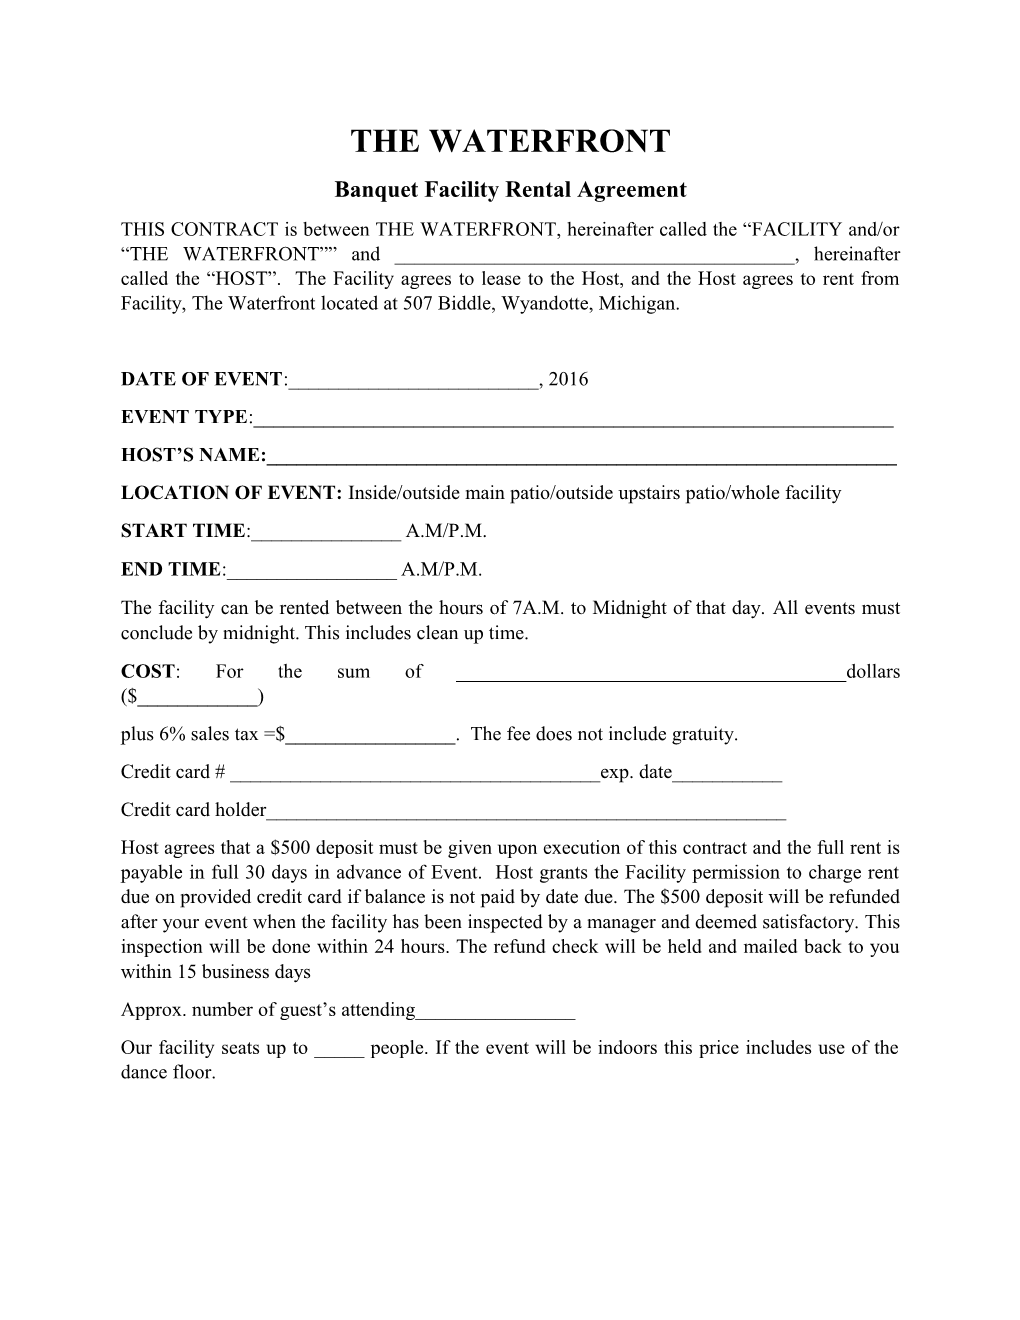 Banquet Facility Rental Agreement